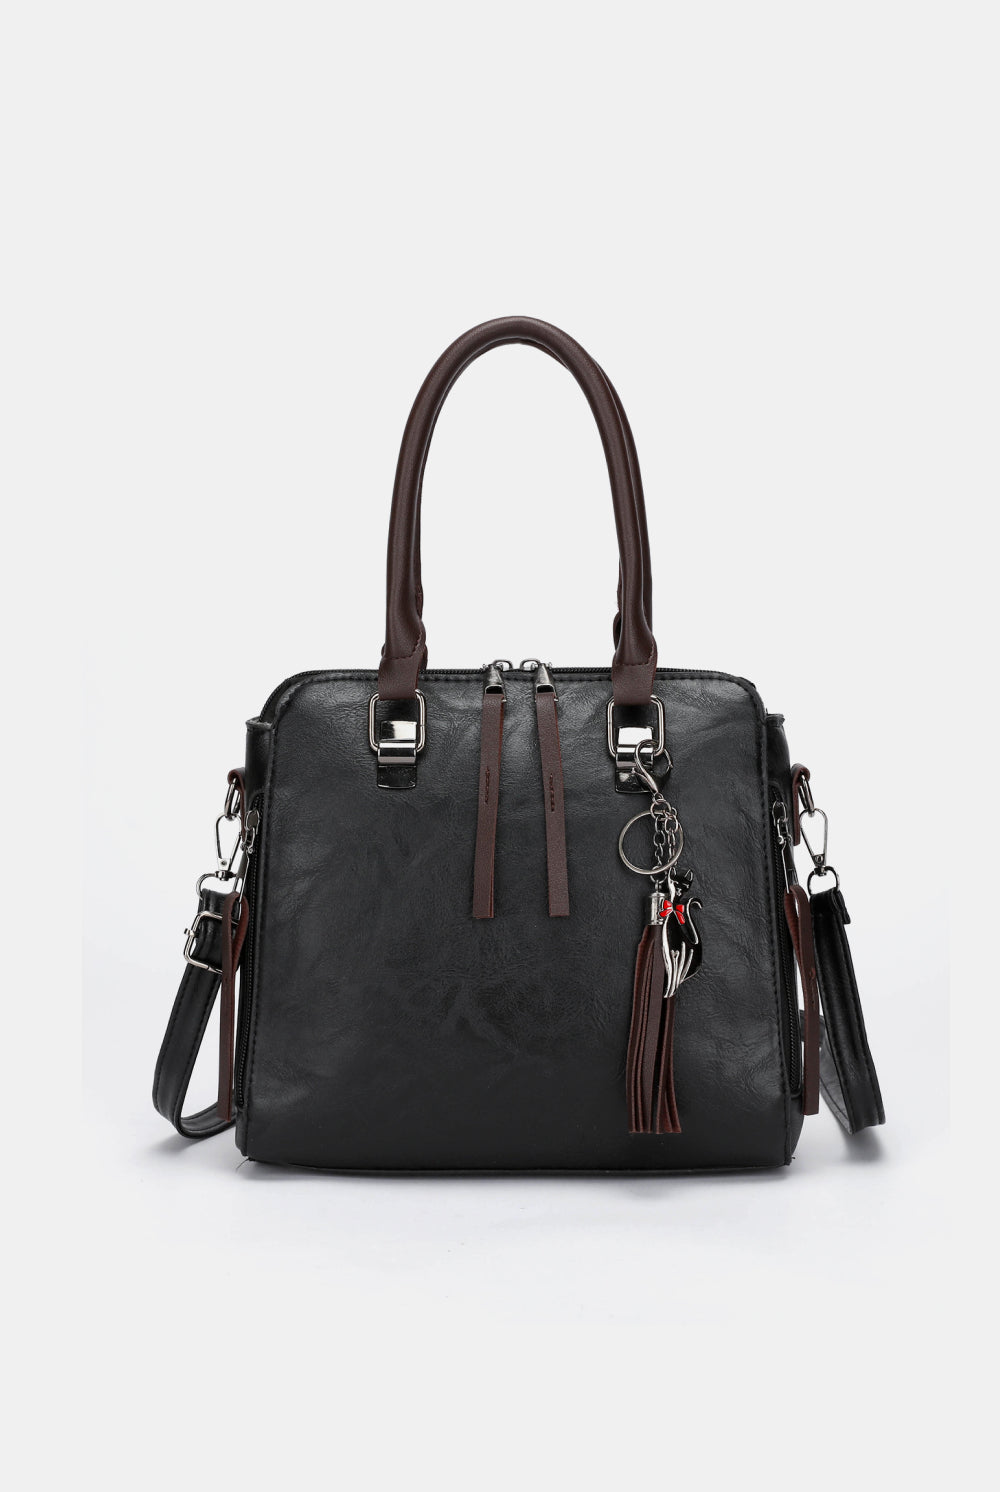 Dark Slate Gray 4-Piece PU Leather Bag Set Handbags